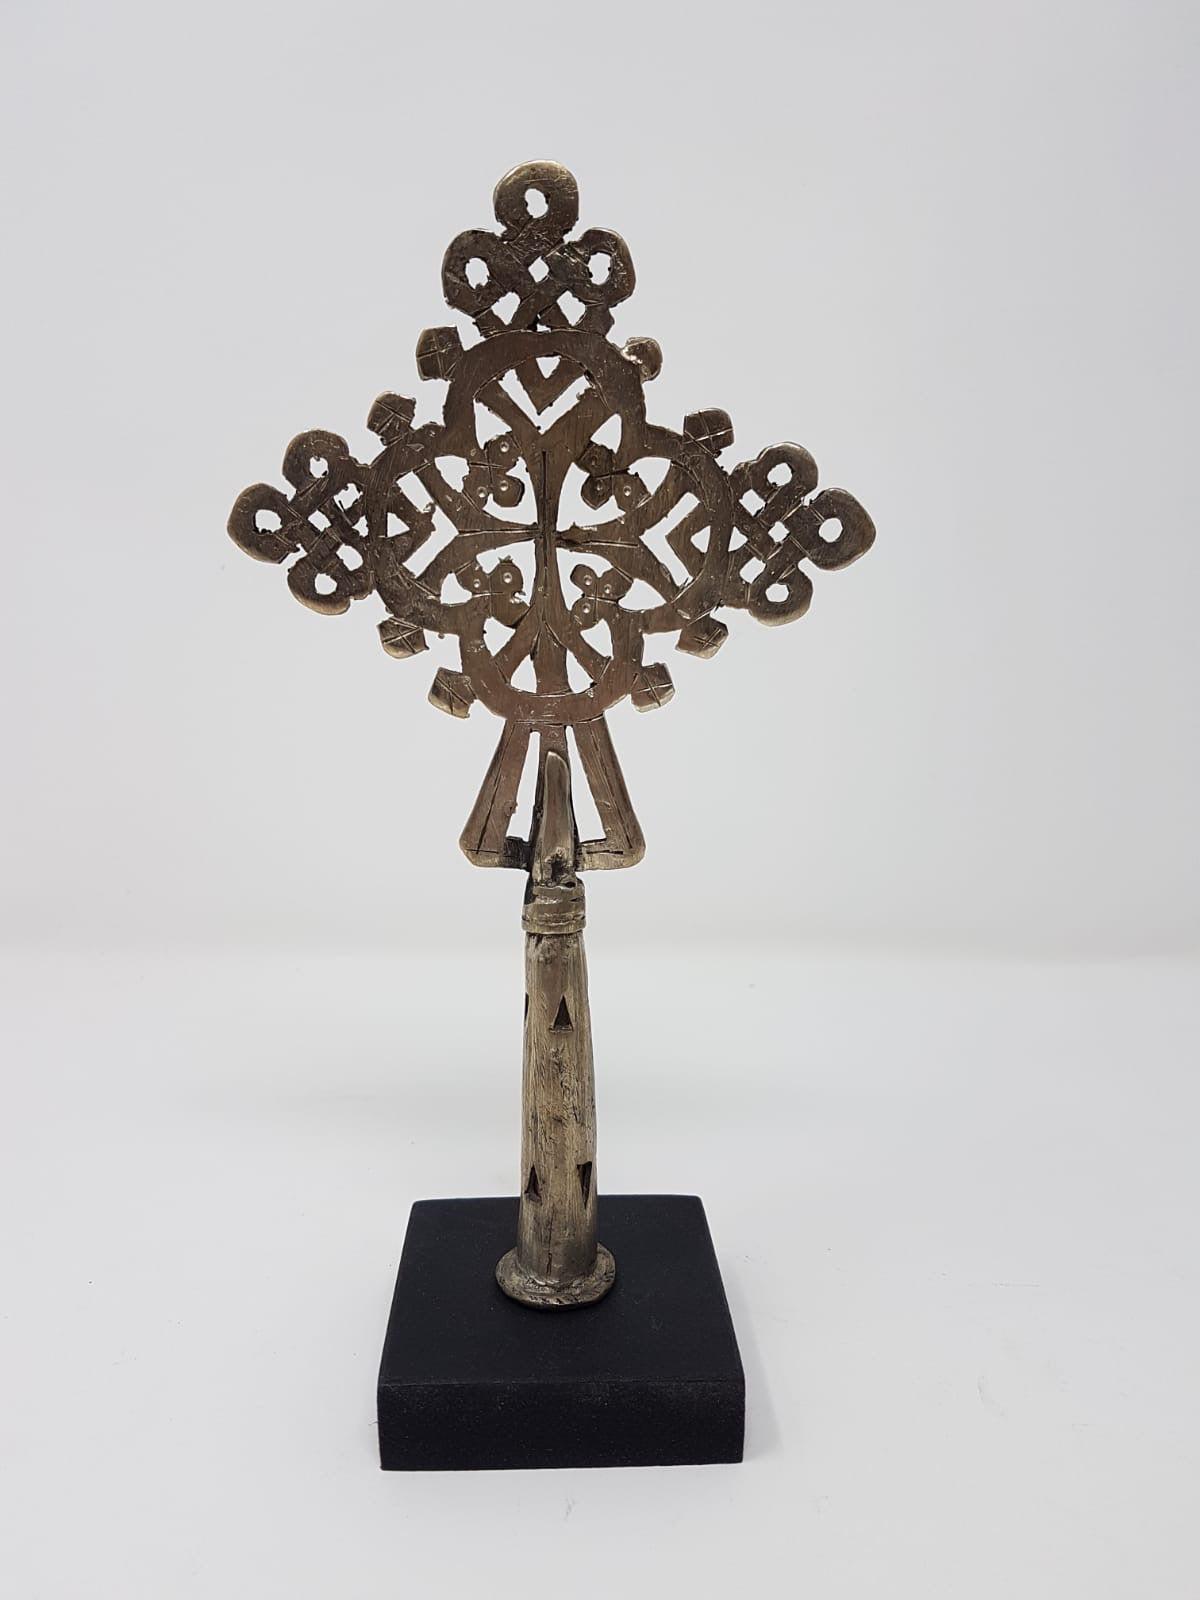 Ethiopian Cross